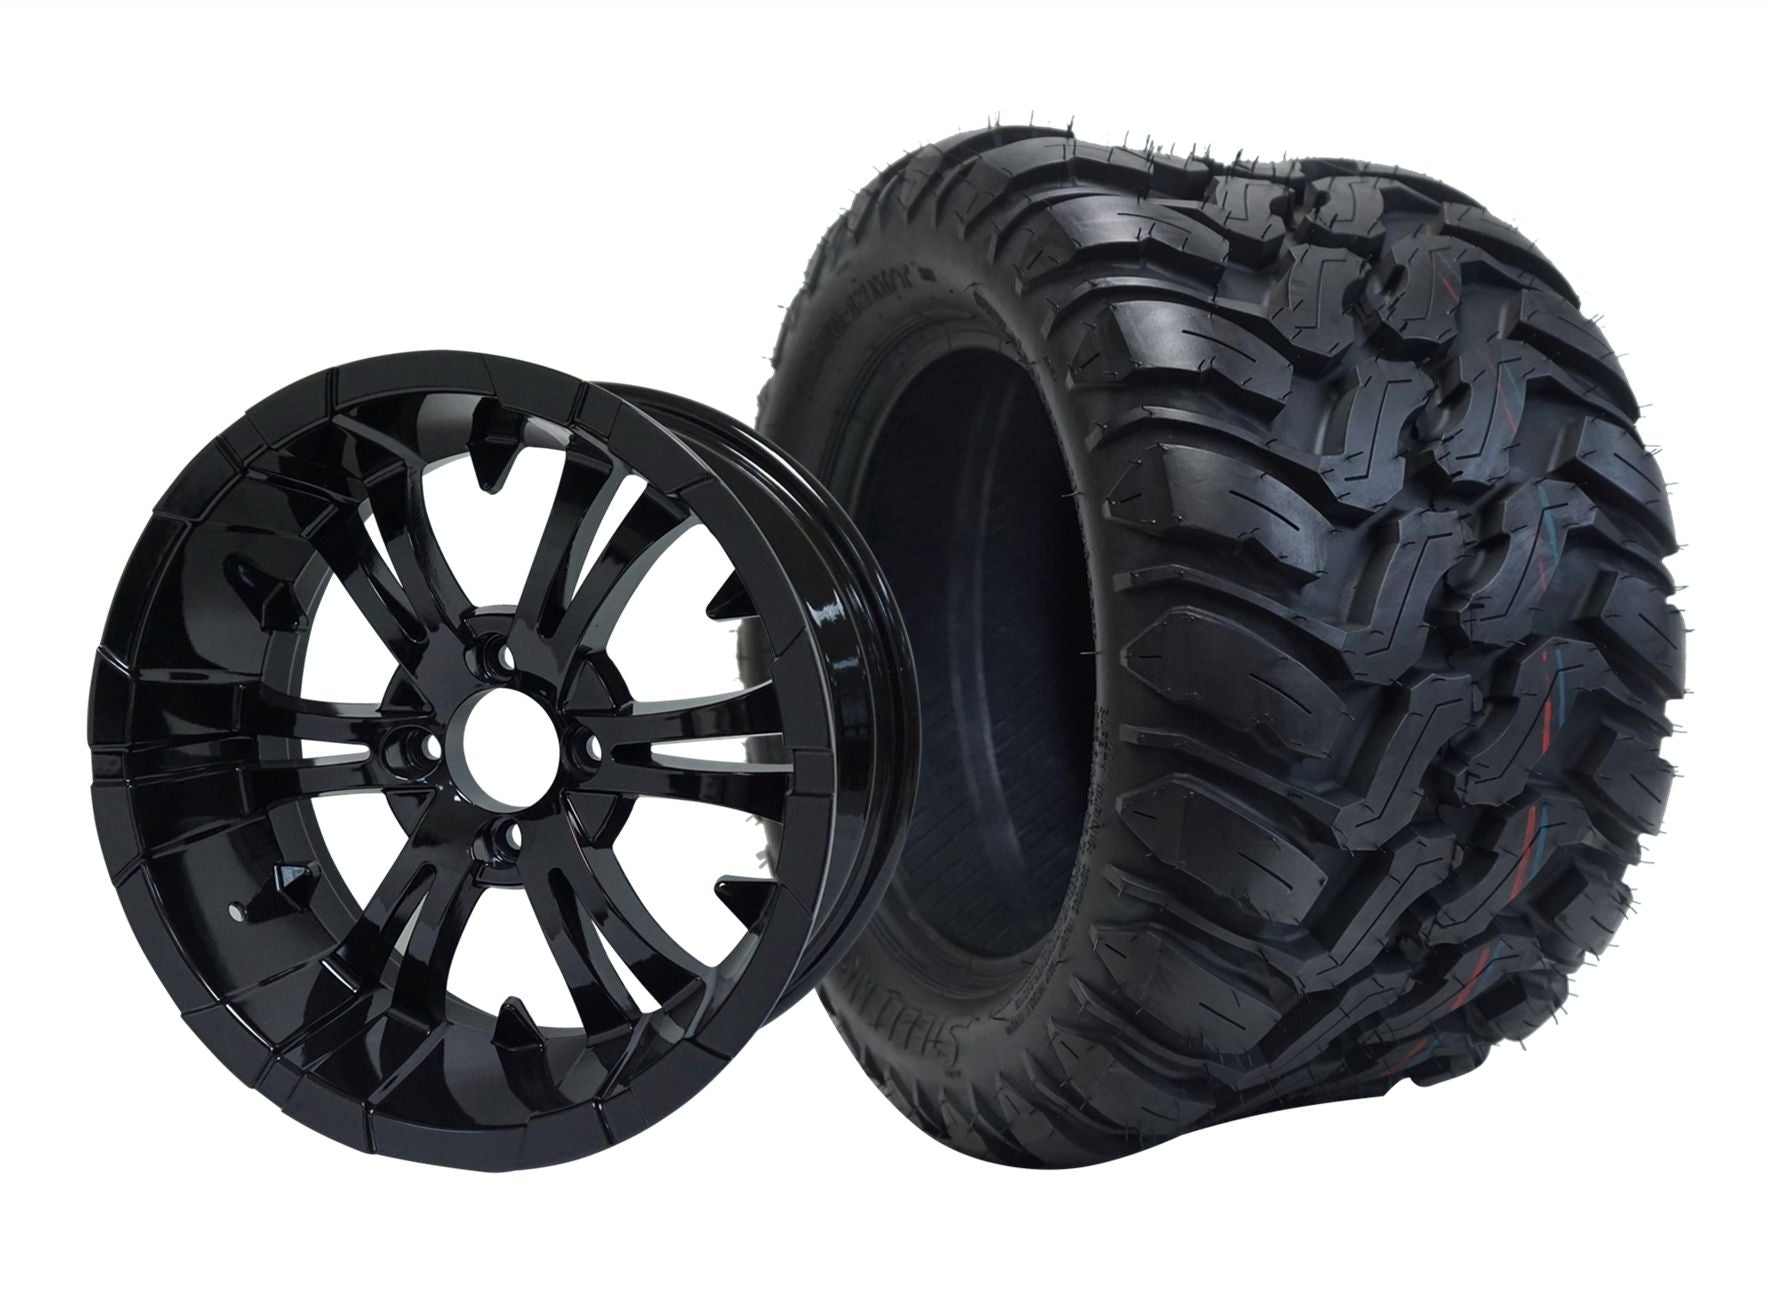 SGC 12" Vampire Glossy Black Wheel - Aluminum AlloySTEELENG 22"x11"-12" Mud Terrain / All Terrain Tire DOT approved WH1242-TR1209